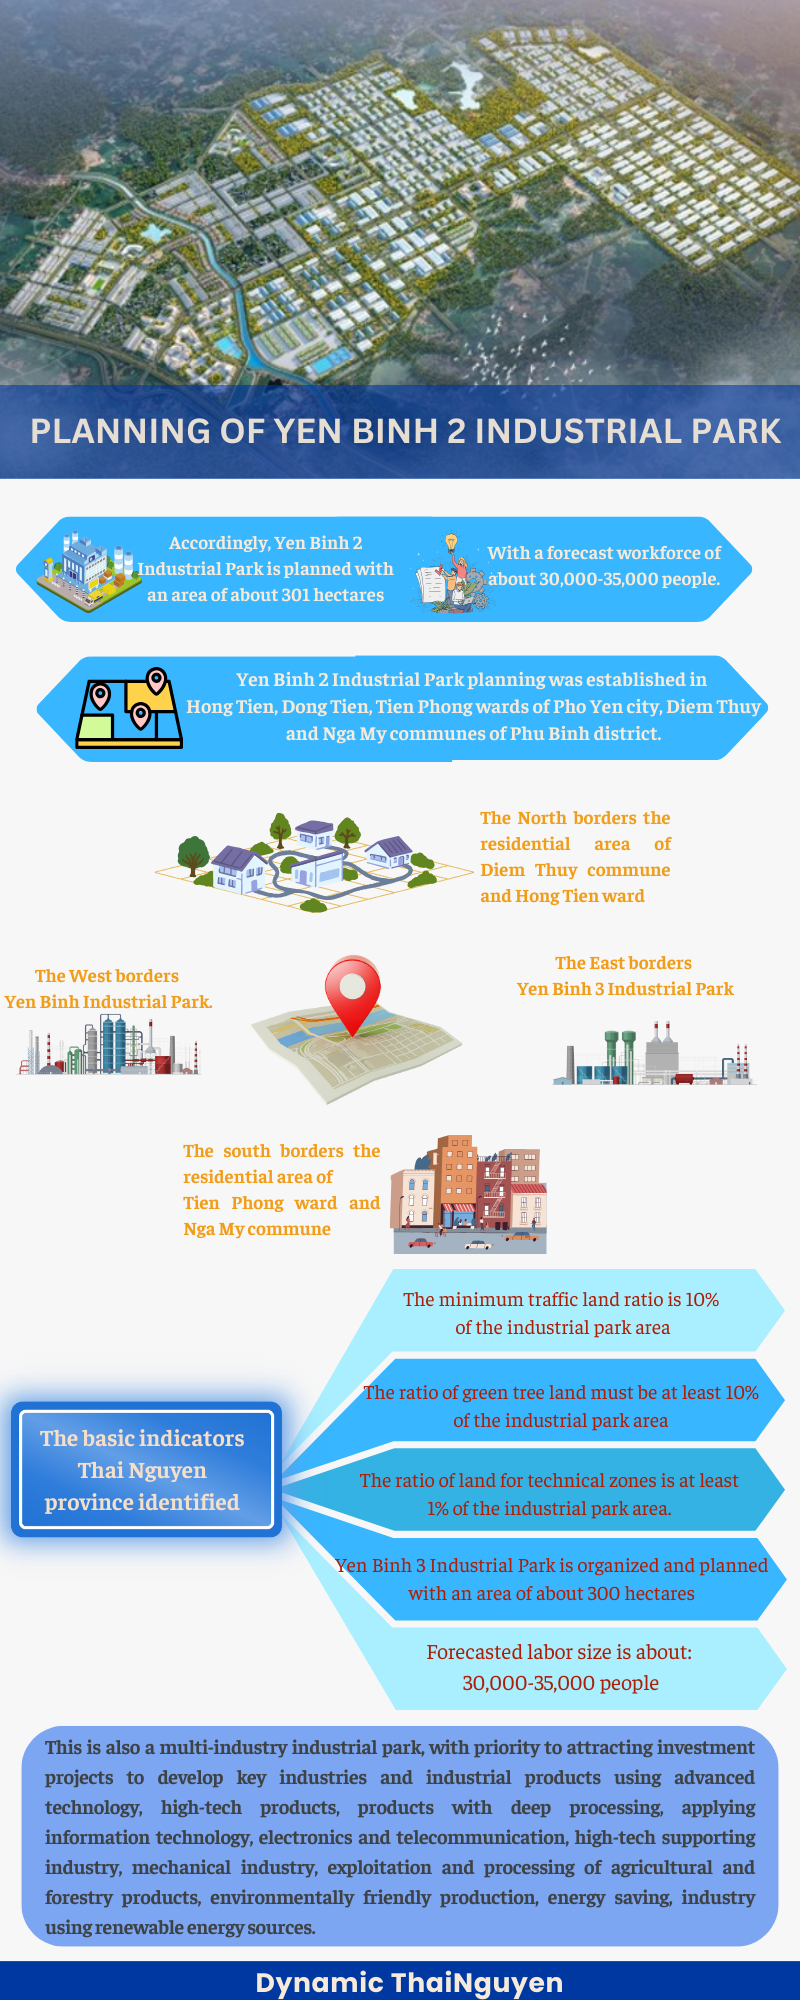 [Infographic] Planning of Yen Binh 2 Industrial Park